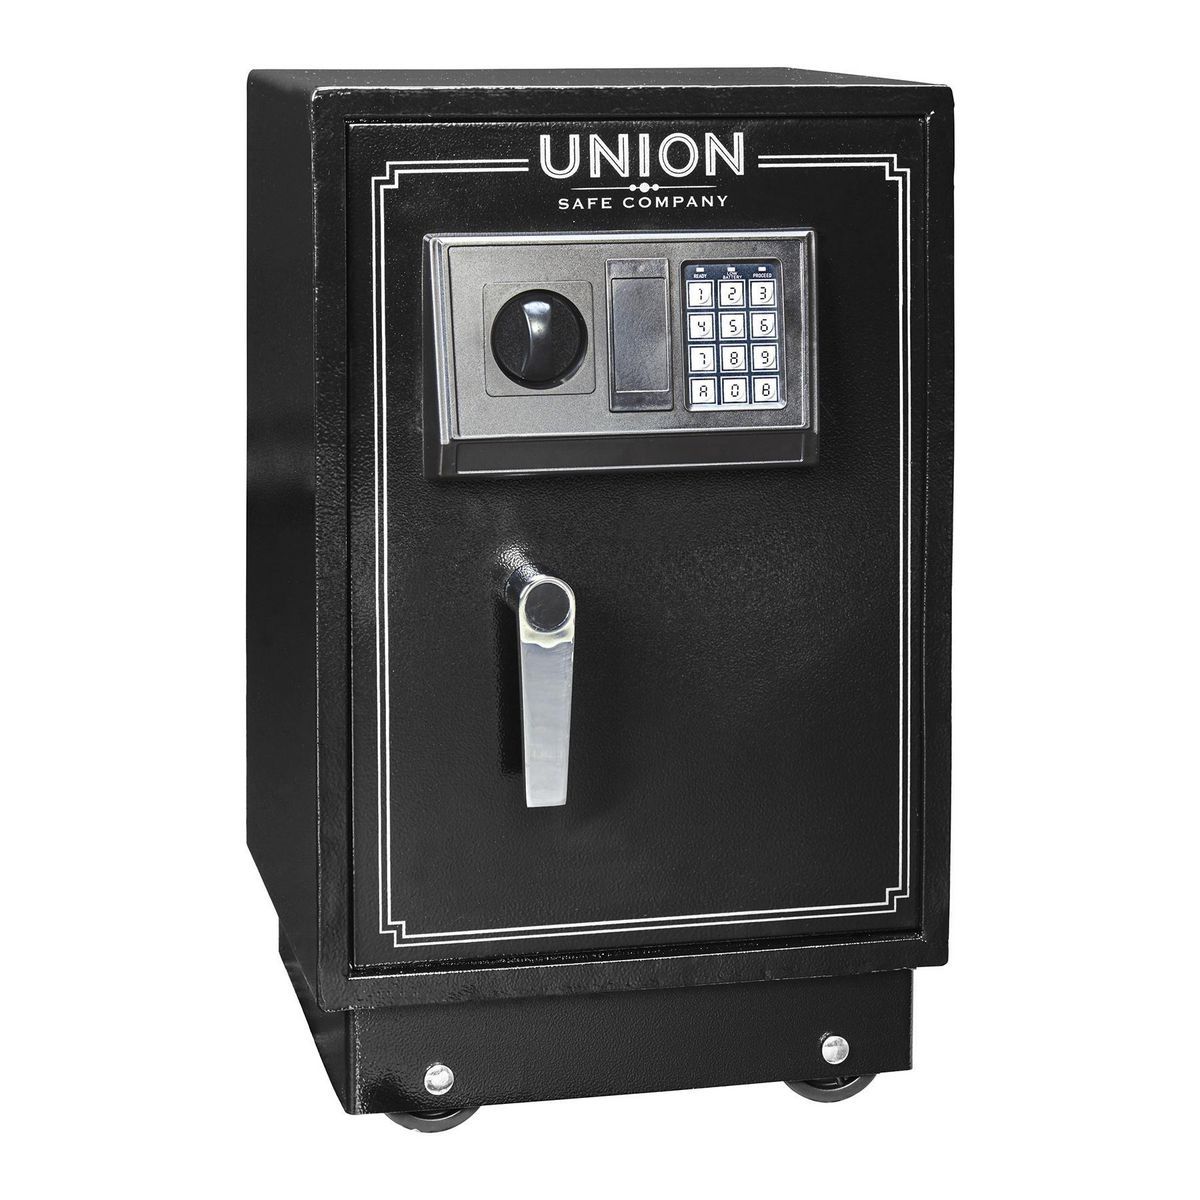 UNION SAFE COMPANY 1.51 cu. ft. Electronic Lock Gun Floor Safe